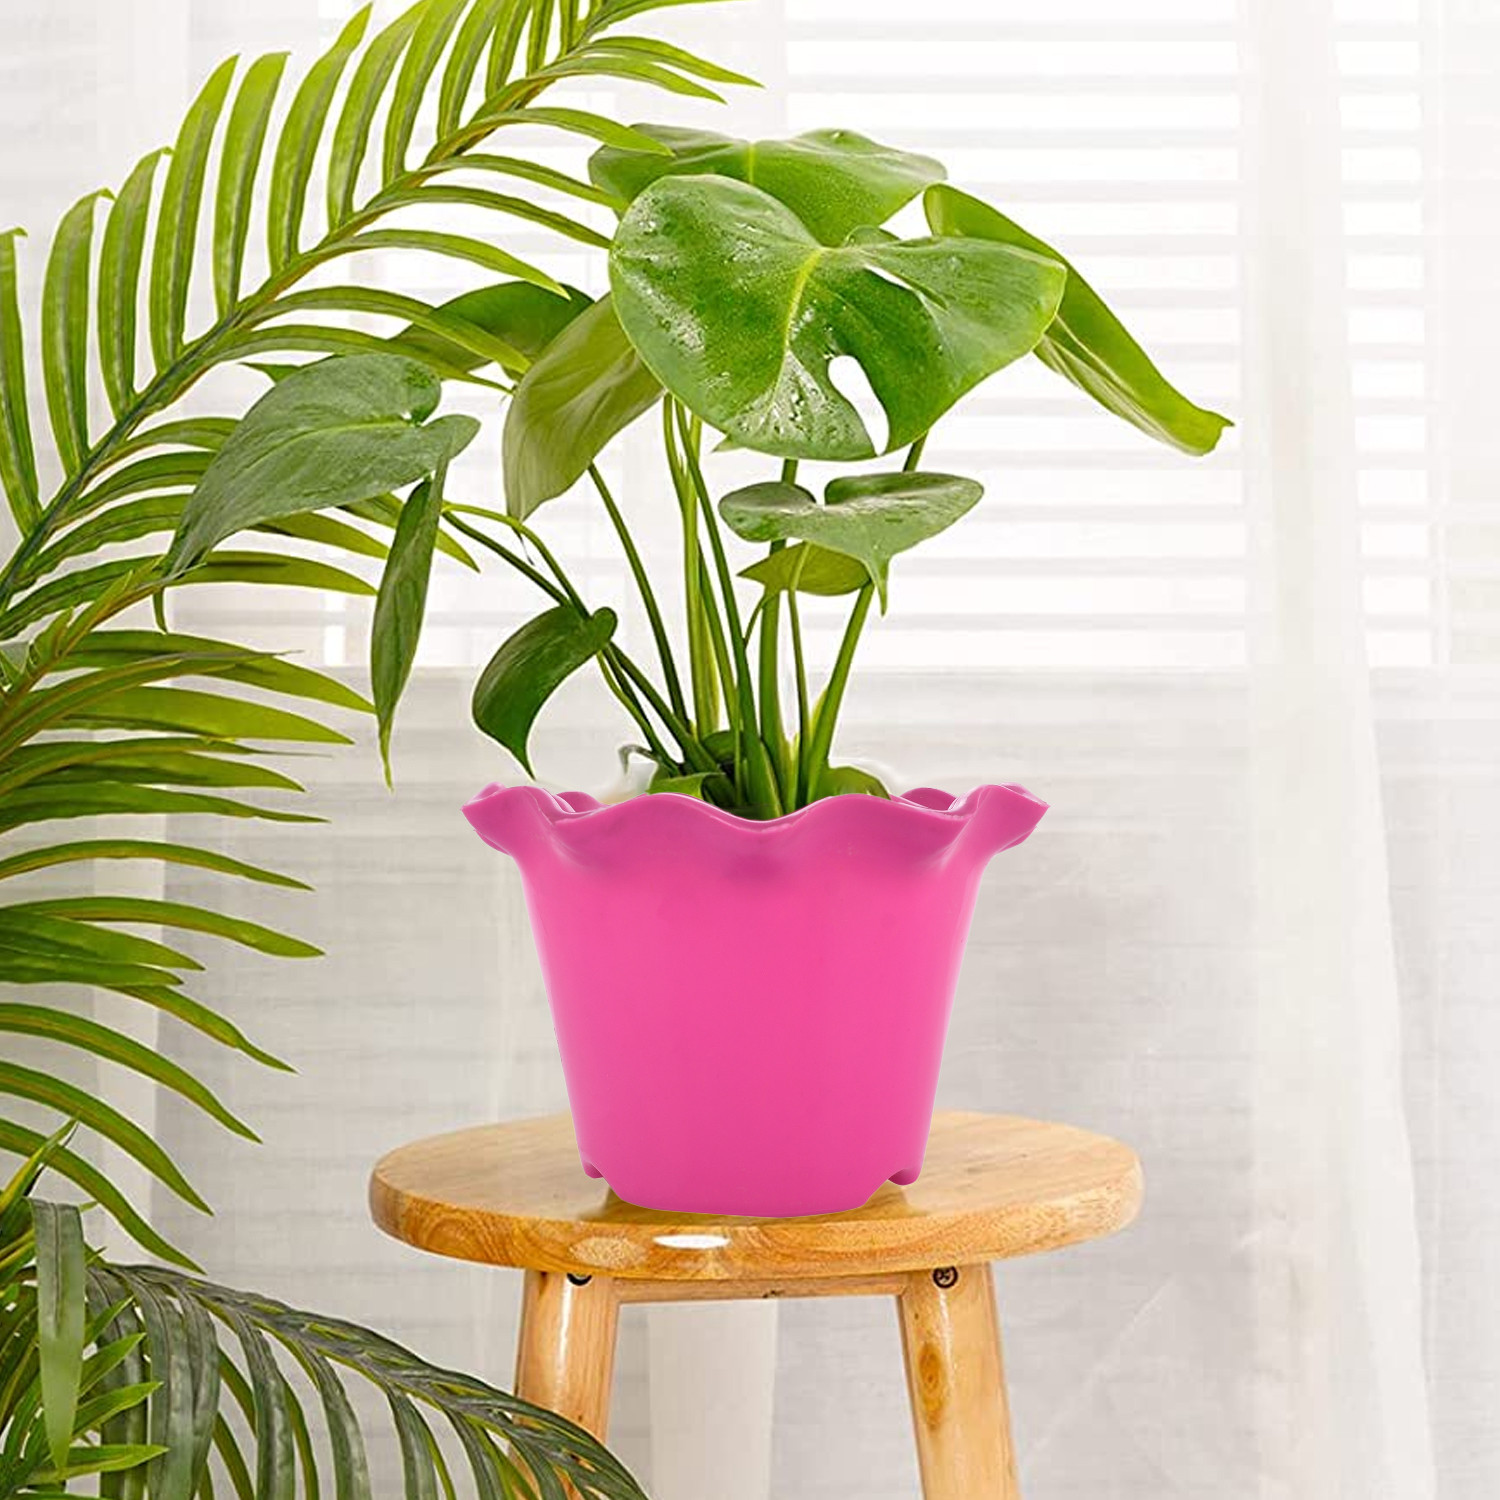 Kuber Industries Blossom Flower Pot|Durable Plastic Flower Pots|Planters for Home Décor|Garden|Living Room|Balcony|Pack of 2 (White & Pink)